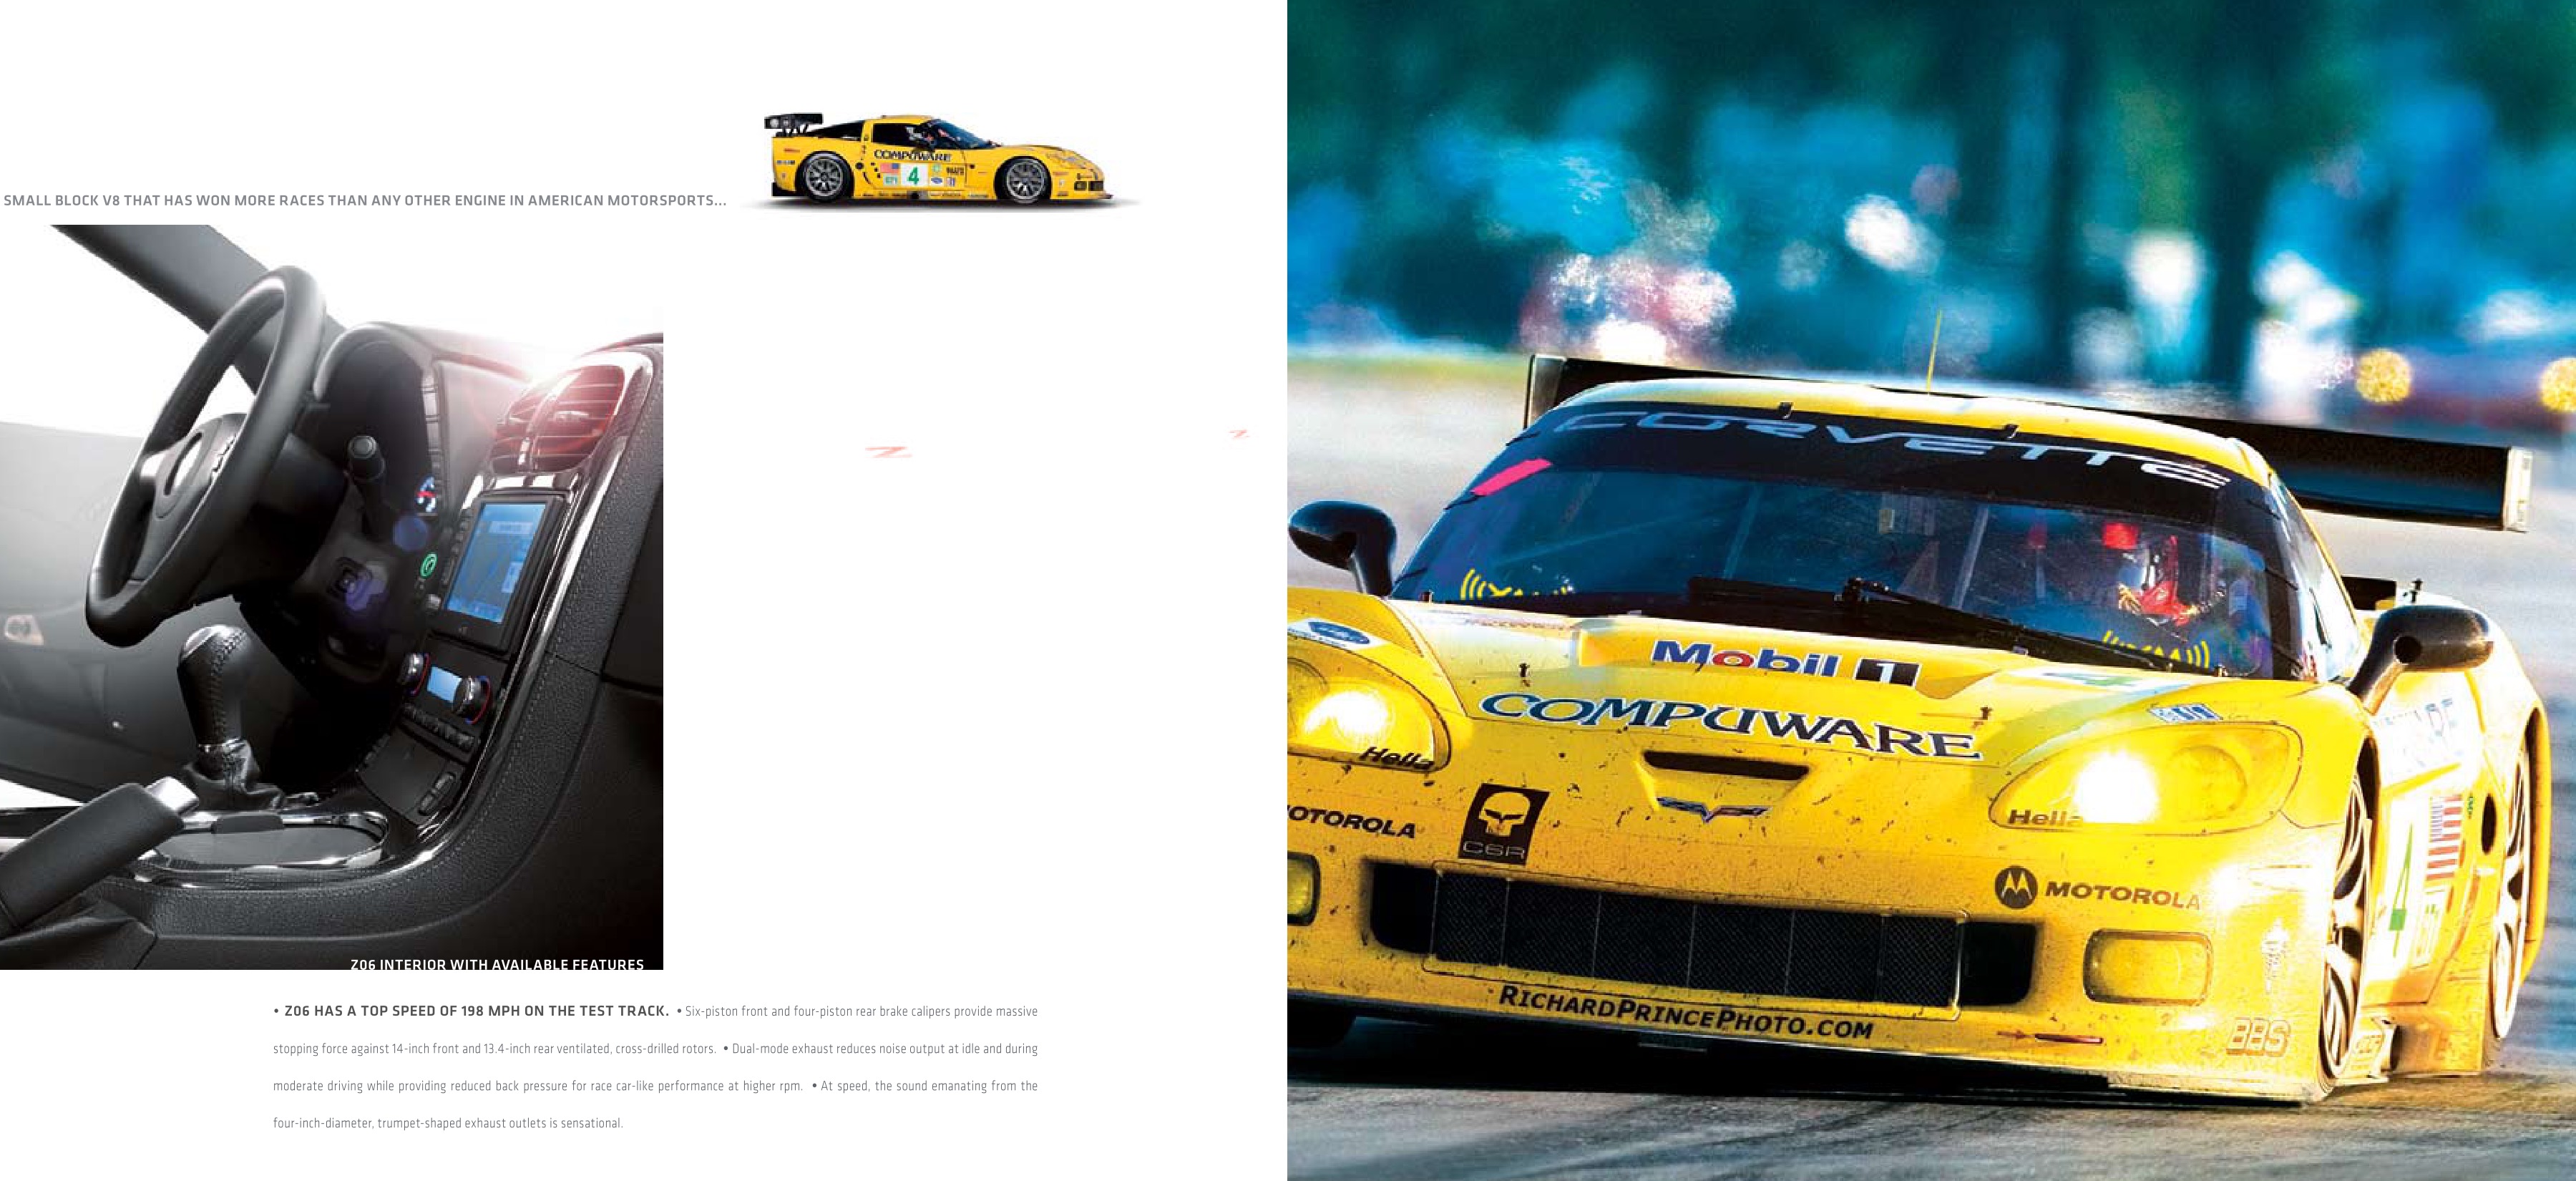 2008 Corvette Brochure Page 14